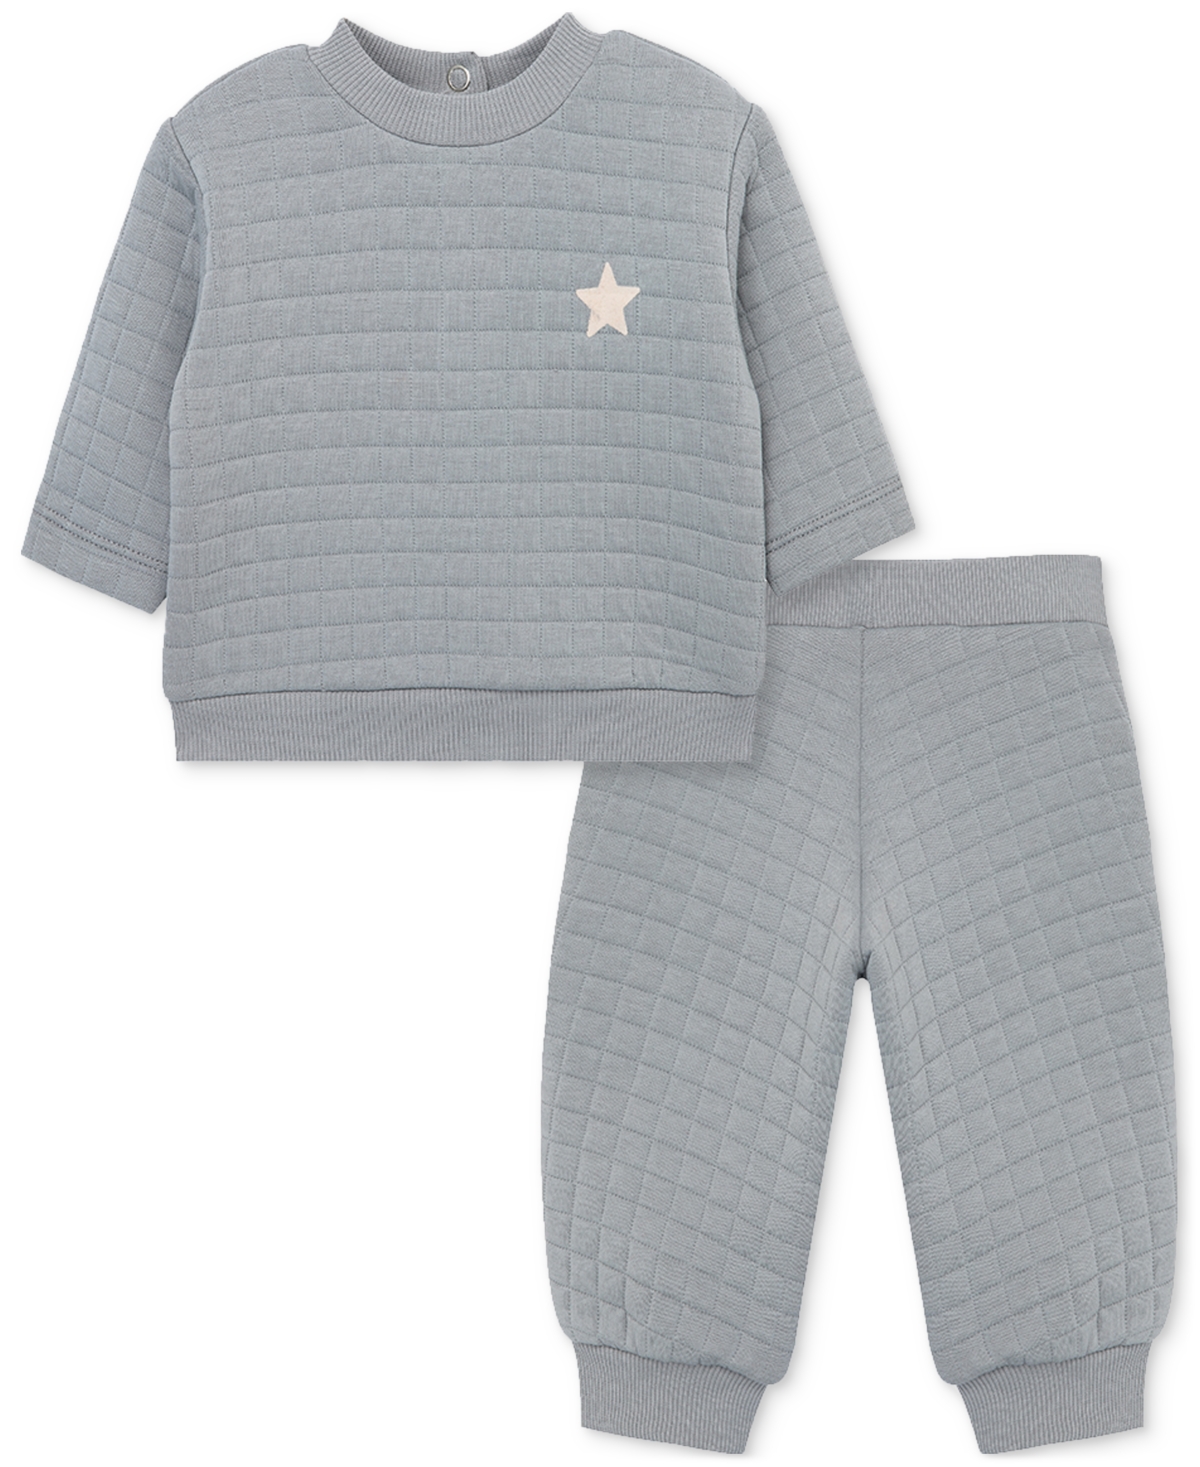 Focus Baby Galaxy Sweatshirt And Pants, 2 Piece Set In Gray